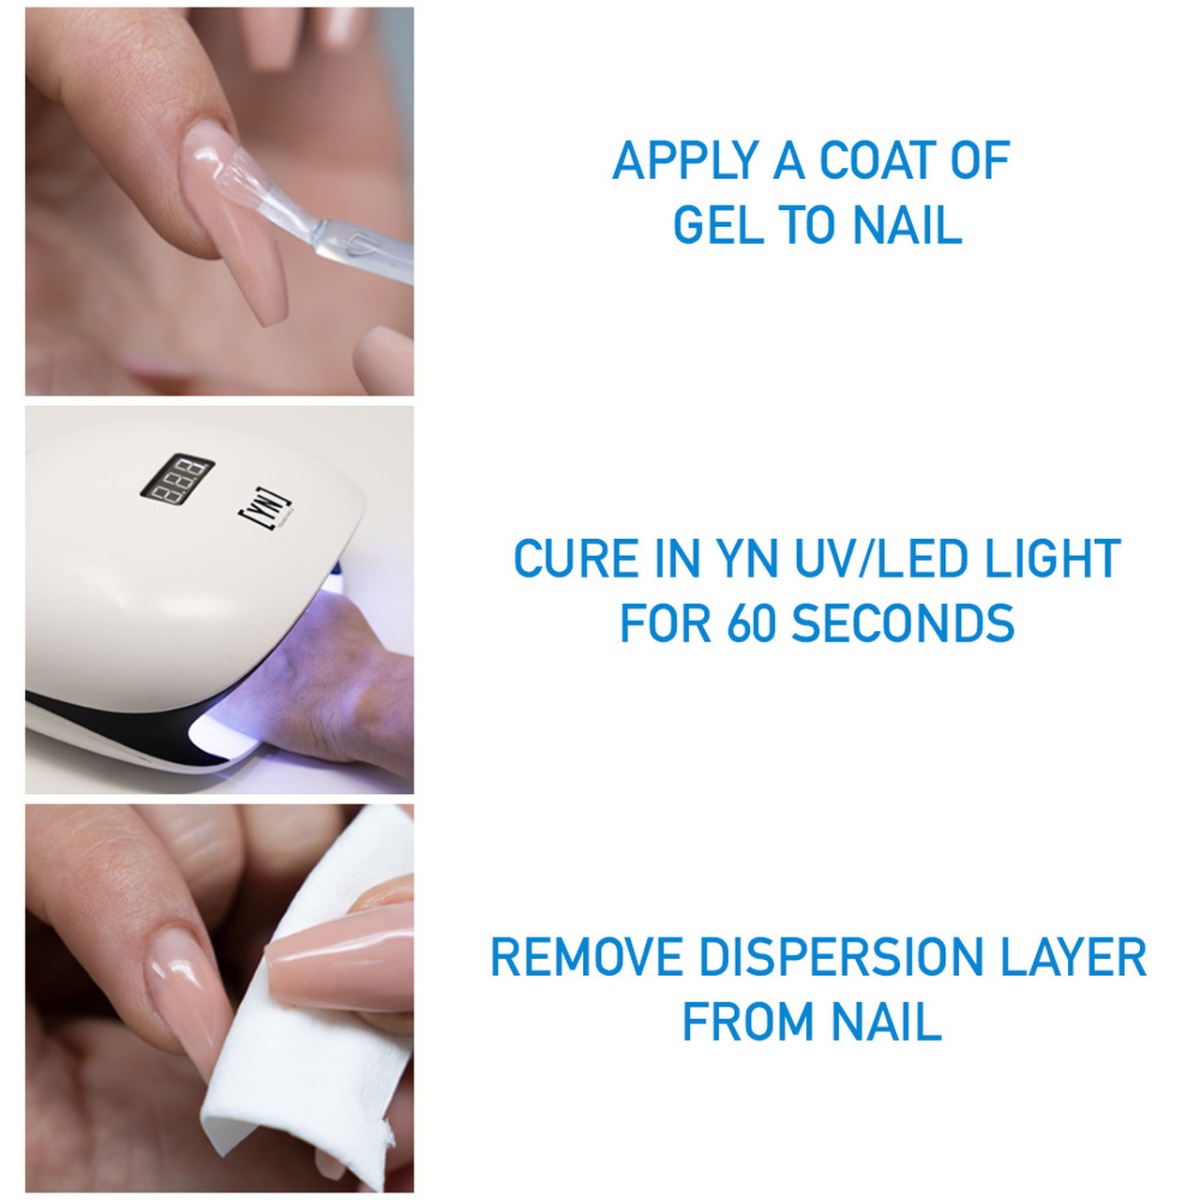 YN UV/LED Curing light